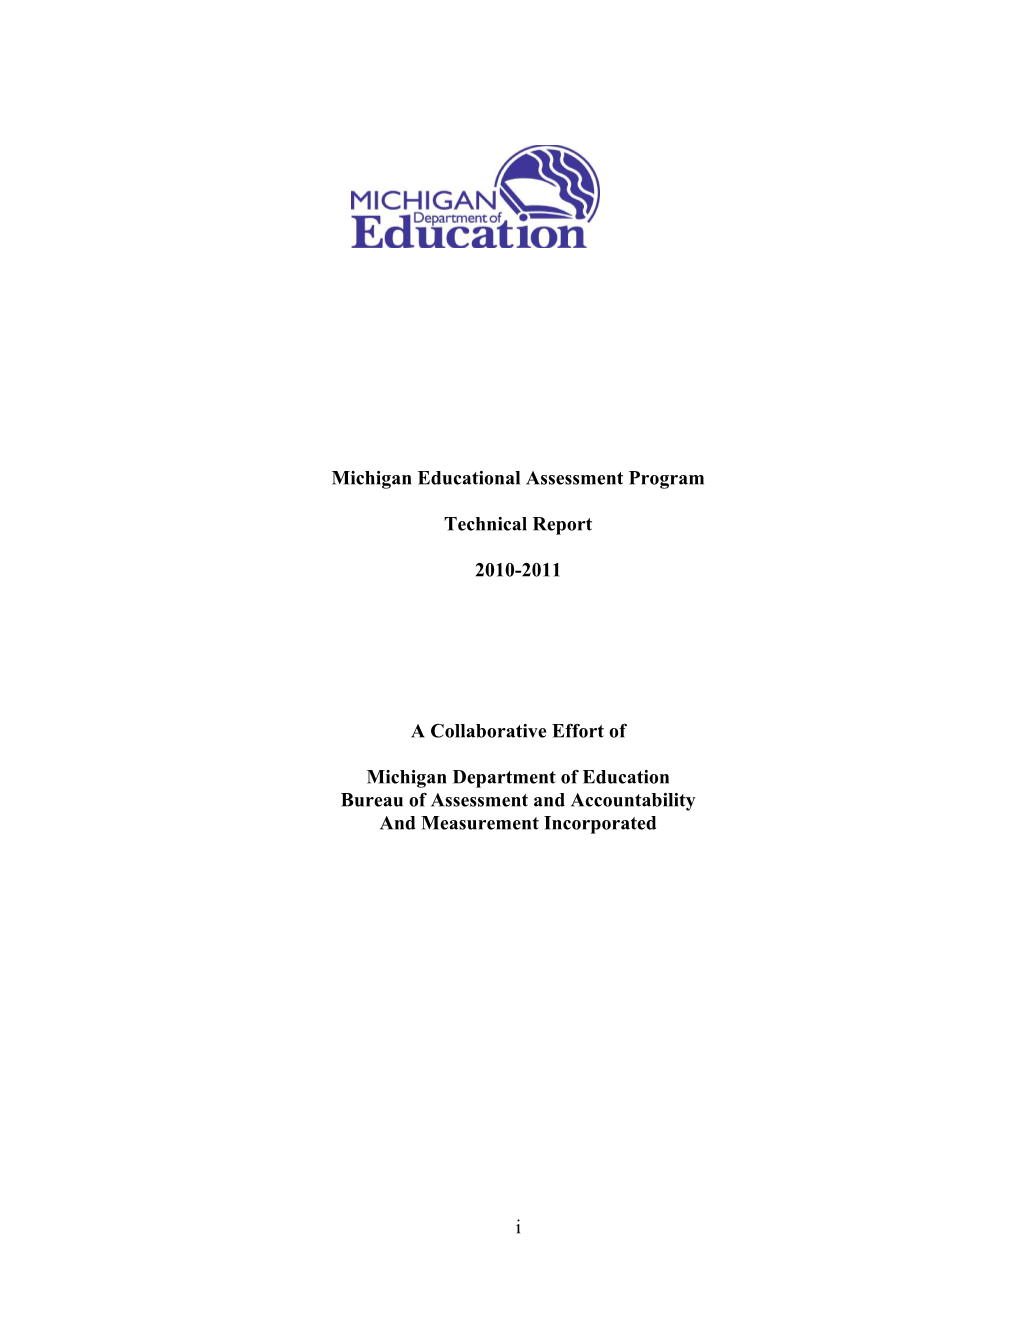 Michigan Educational Assessment Program